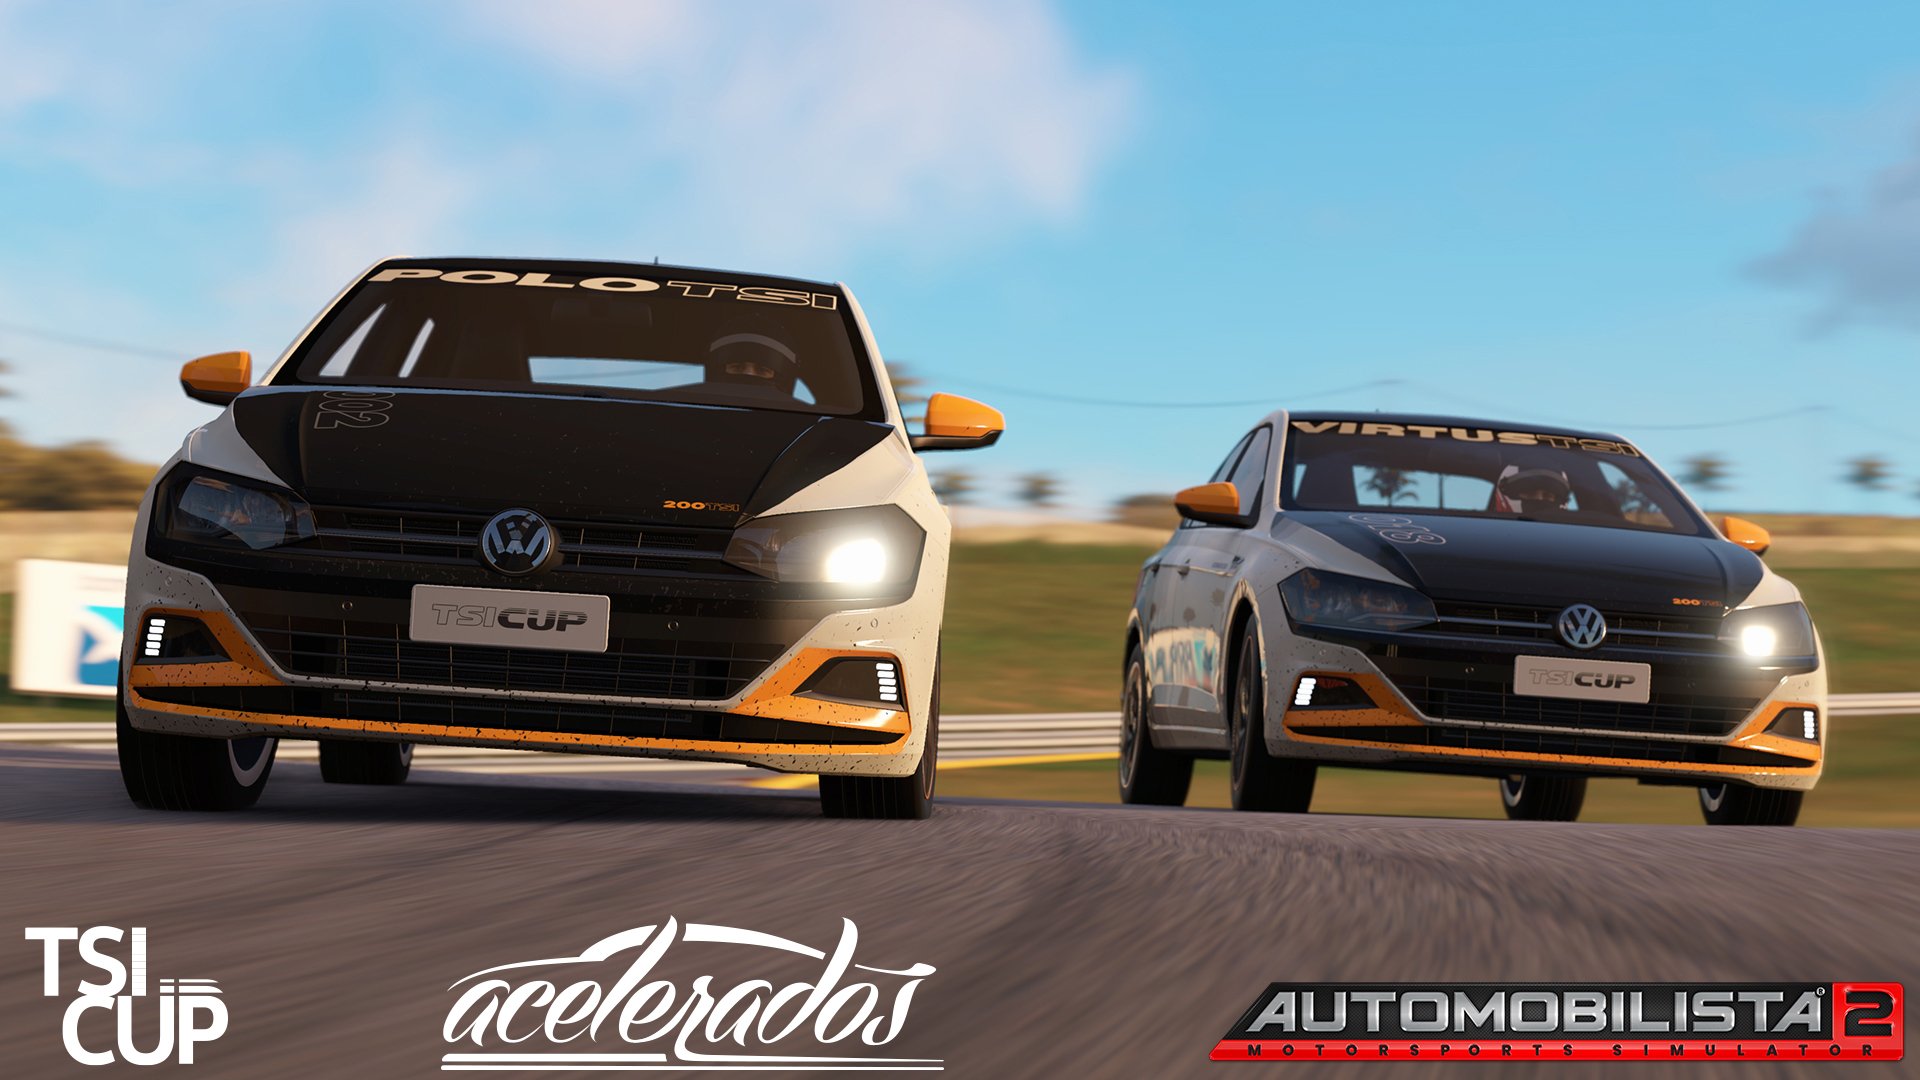 More information about "Automobilista 2: Demo gratis disponibile con la VW TSI Cup"